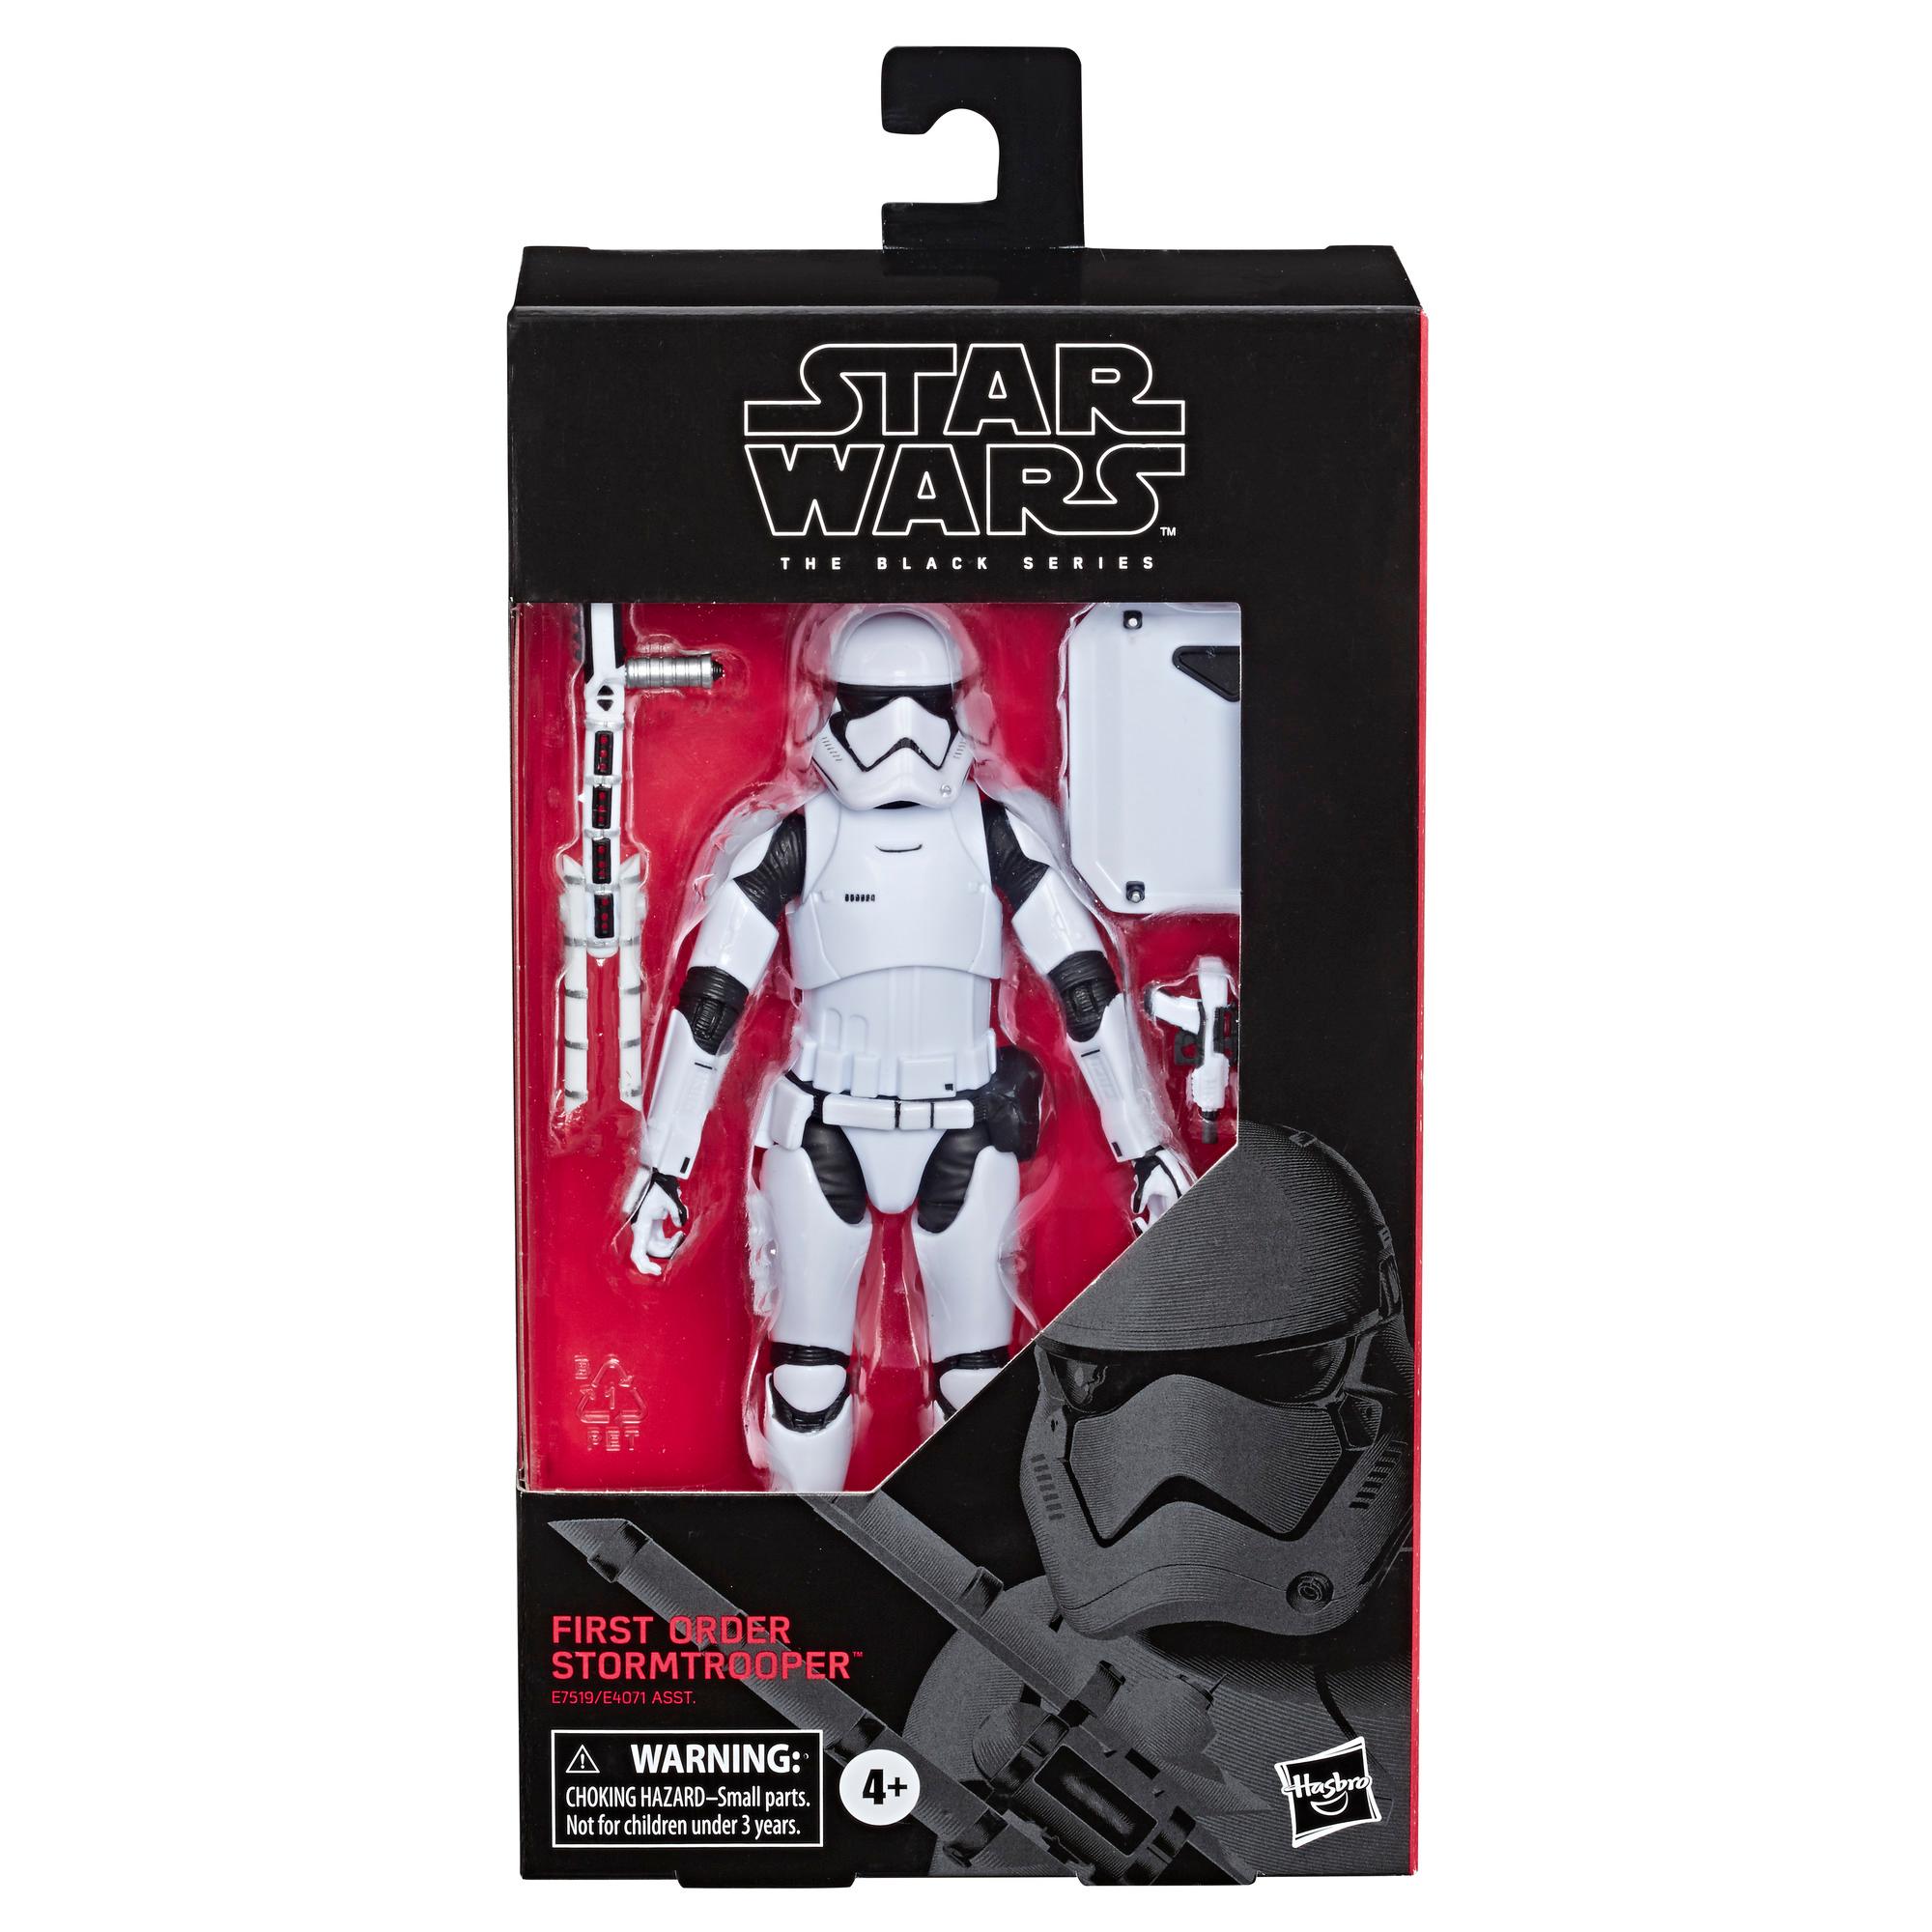 Star Wars The Black Series Stormtrooper Figure 6-Inch for sale online 